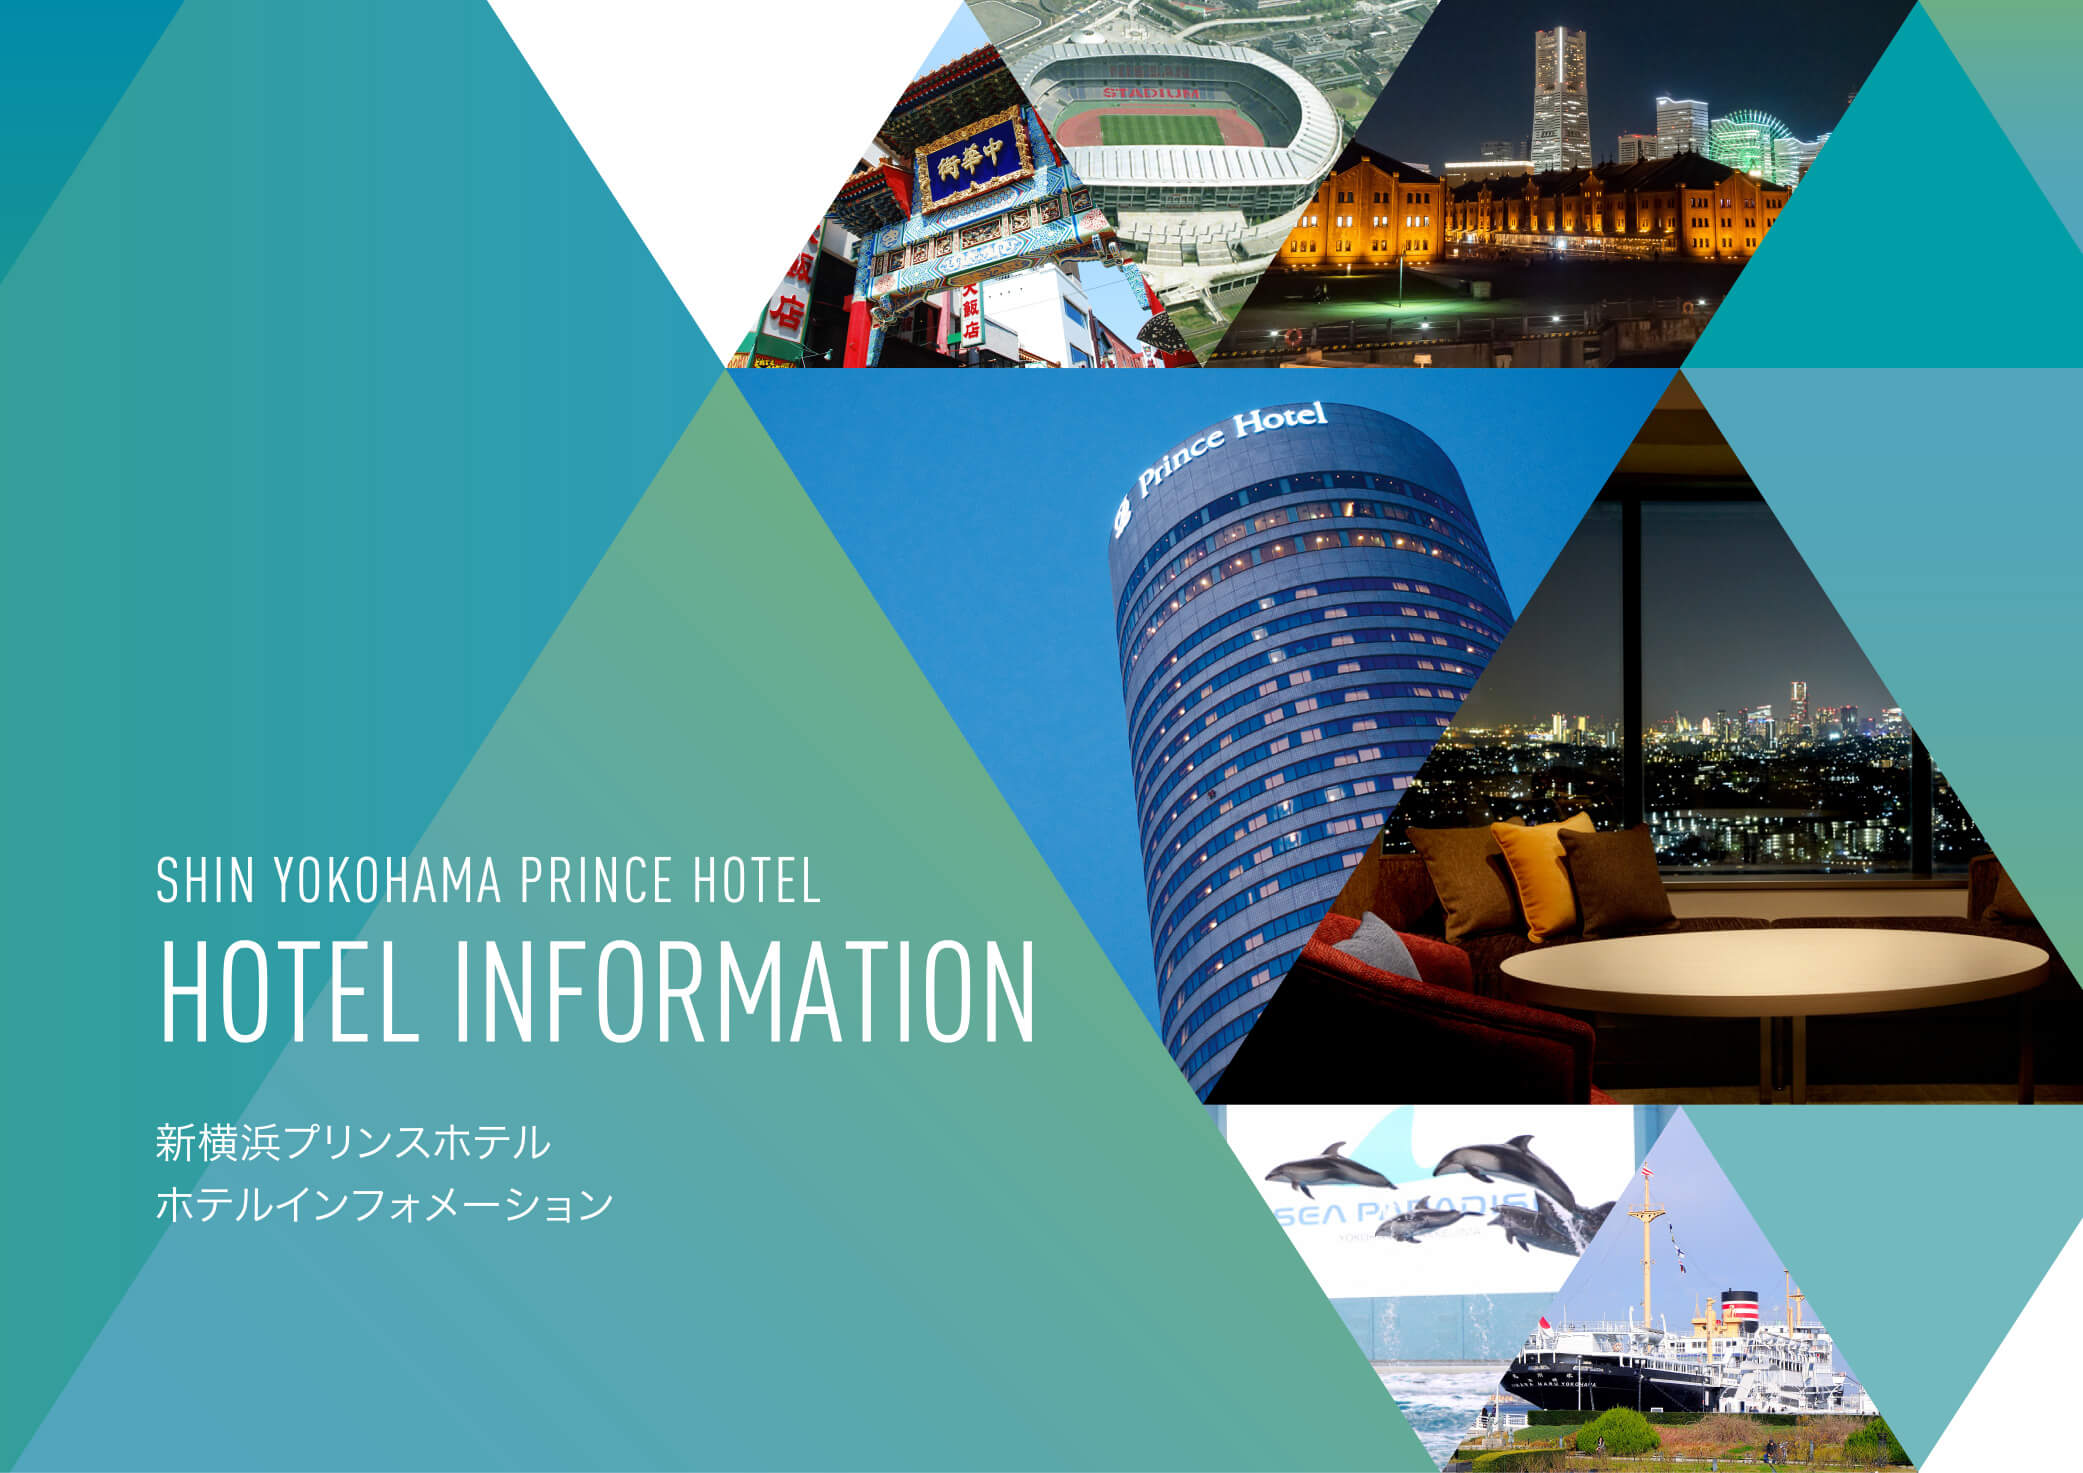 SHIN YOKOHAMA PRINCE HOTEL HOTEL INFORMATION 新横浜プリンスホテル ホテルインフォメーション